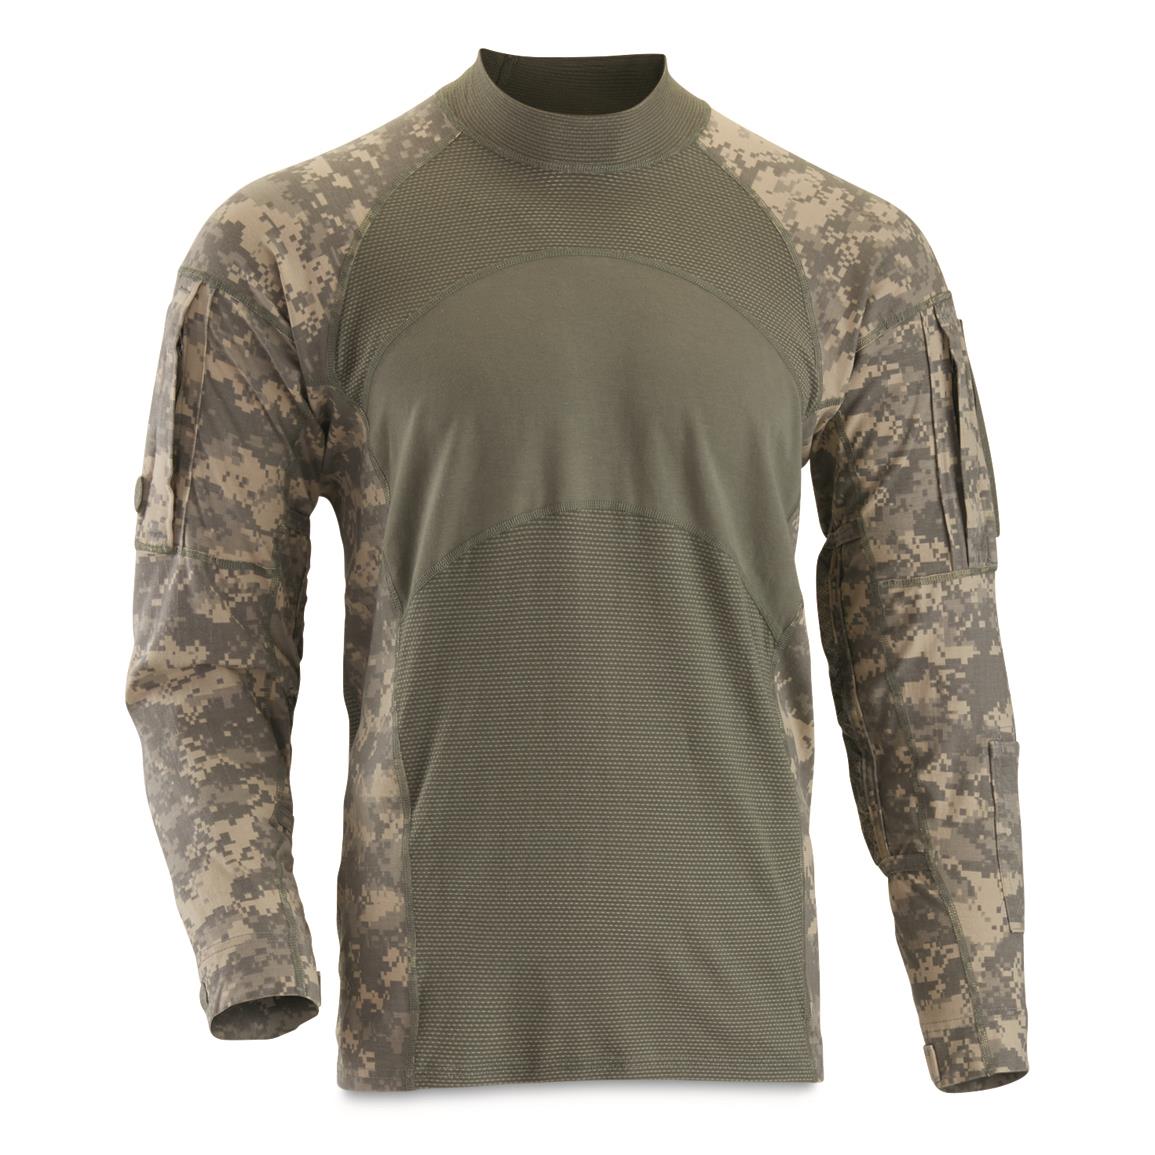 U.S. Military Surplus Massif ACU Army Combat Shirt, New, ACU